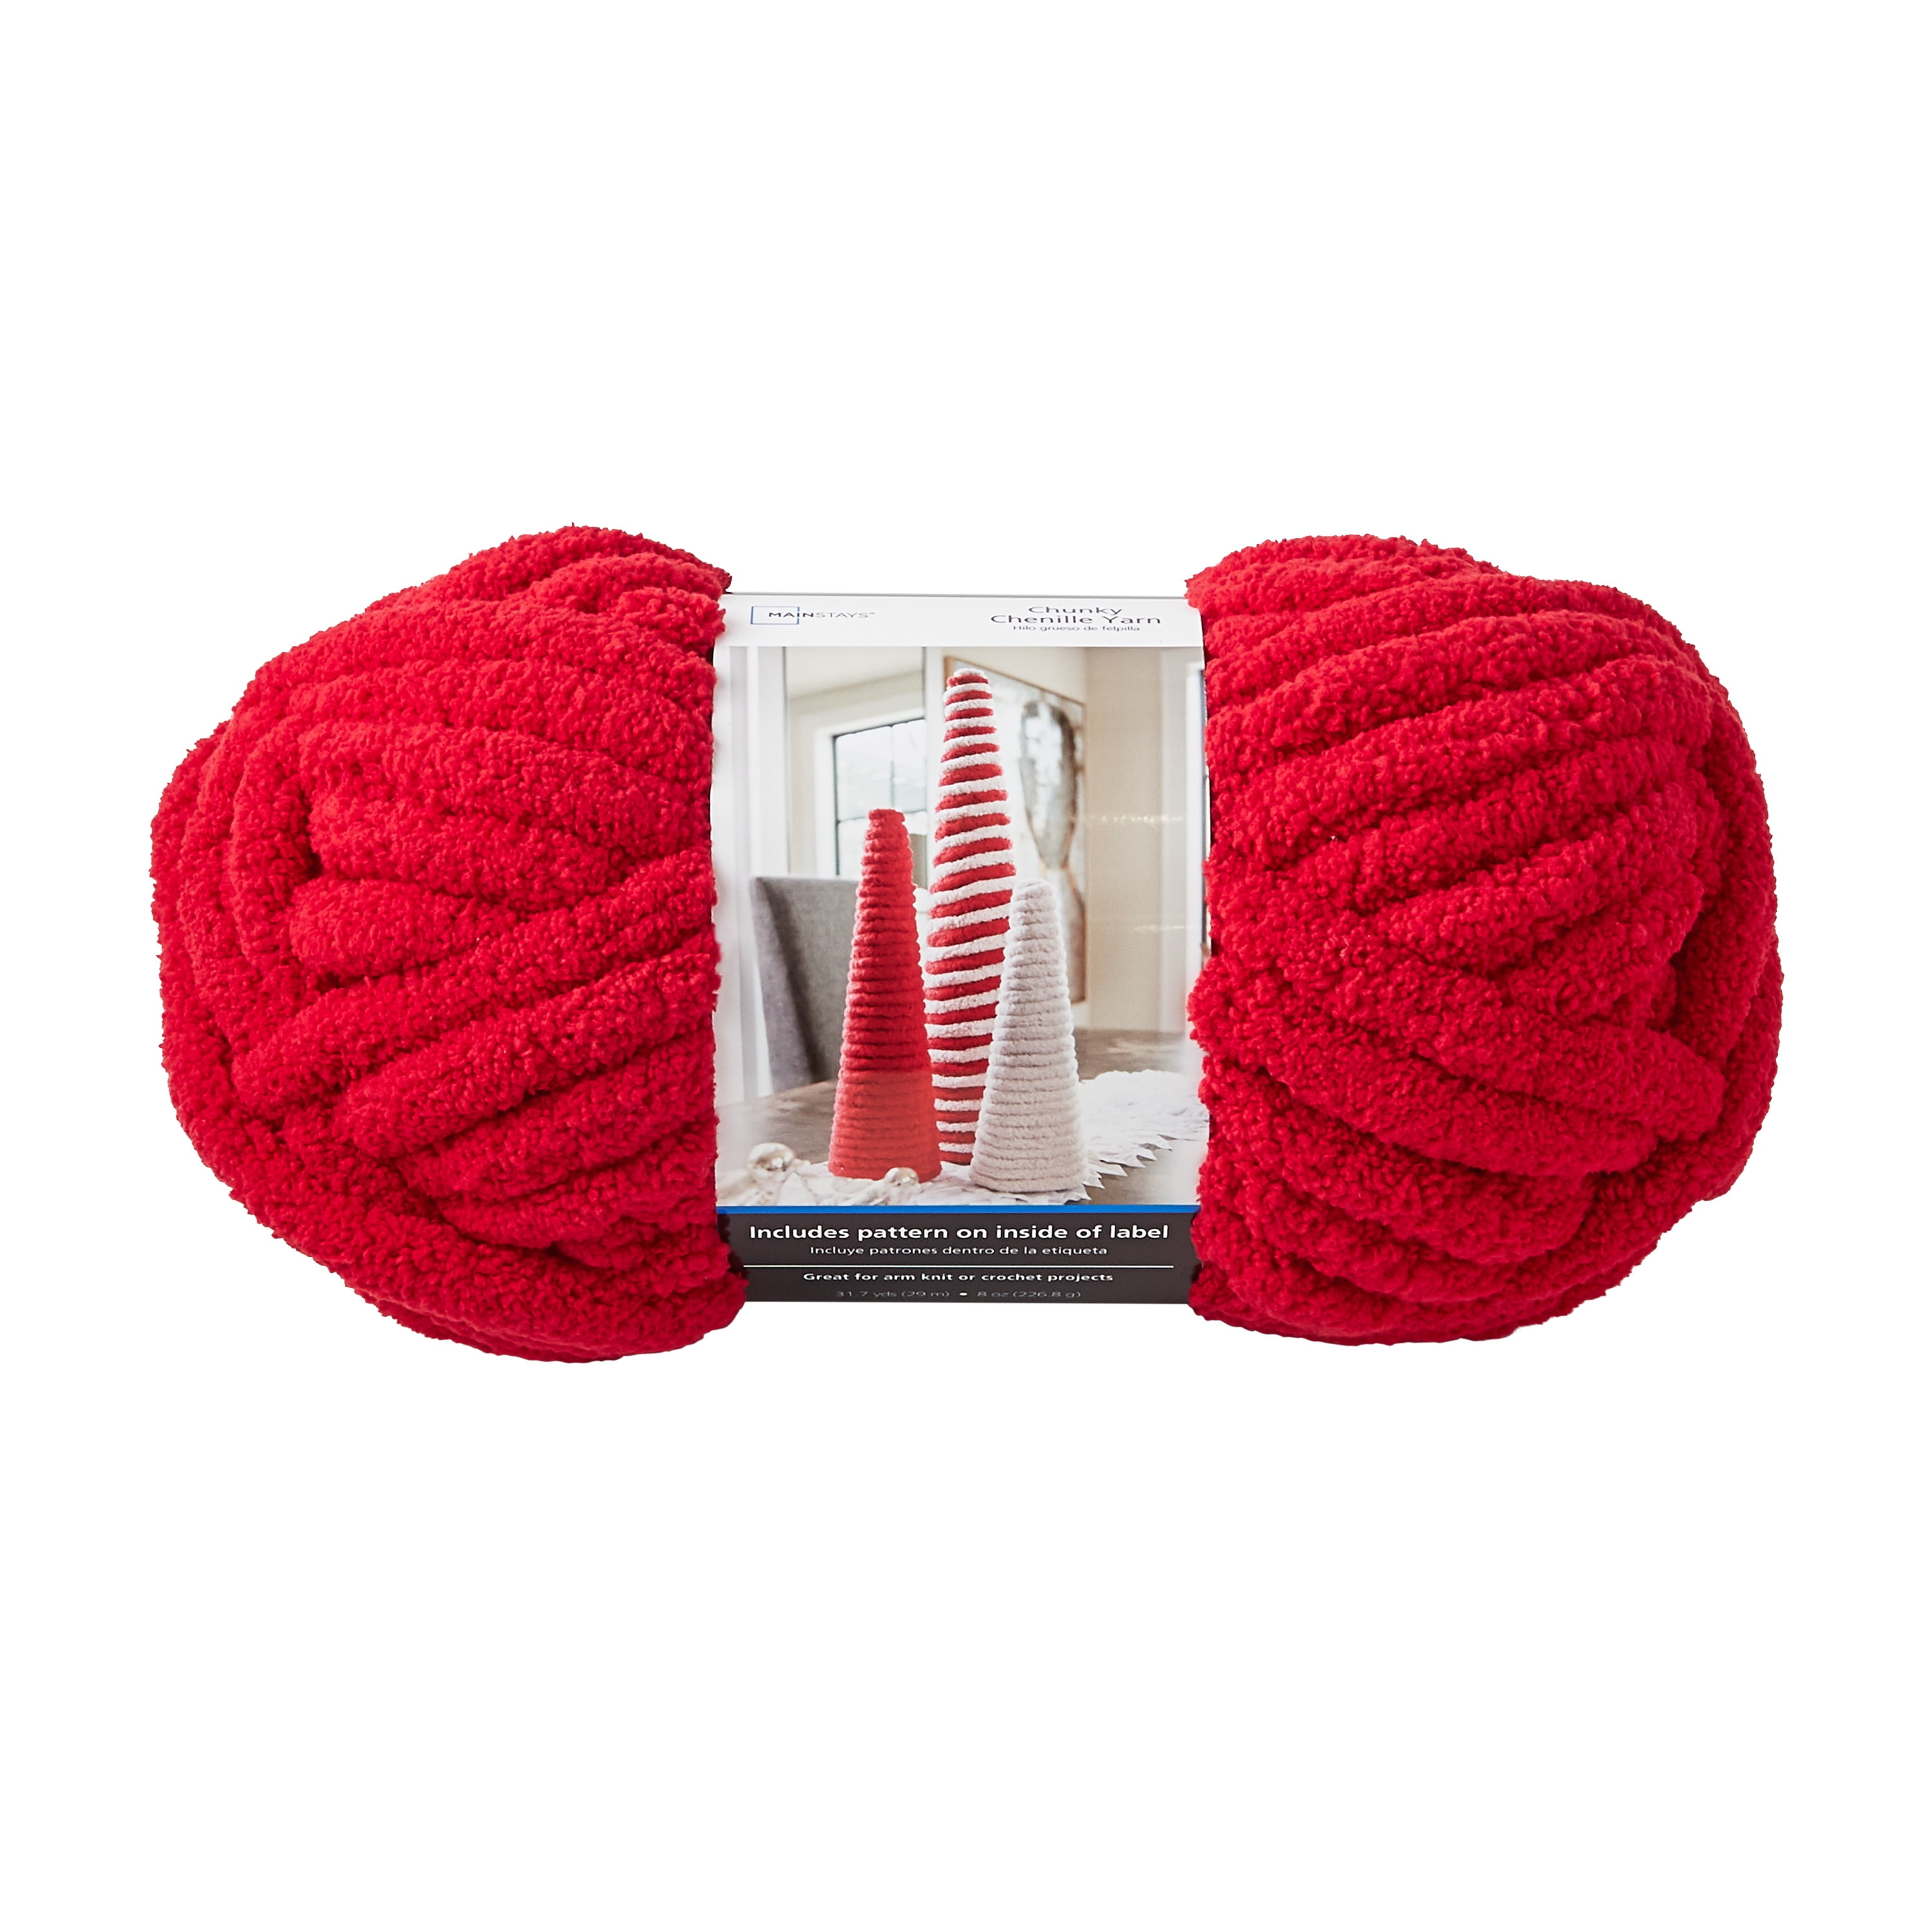 Merlot Super Chunky Yarn, Dark Red Chunky Yarn, 100% Acrylic, Vegan  Friendly, 100g Ball of Yarn, Chunky Knitting, Washable Yarn 